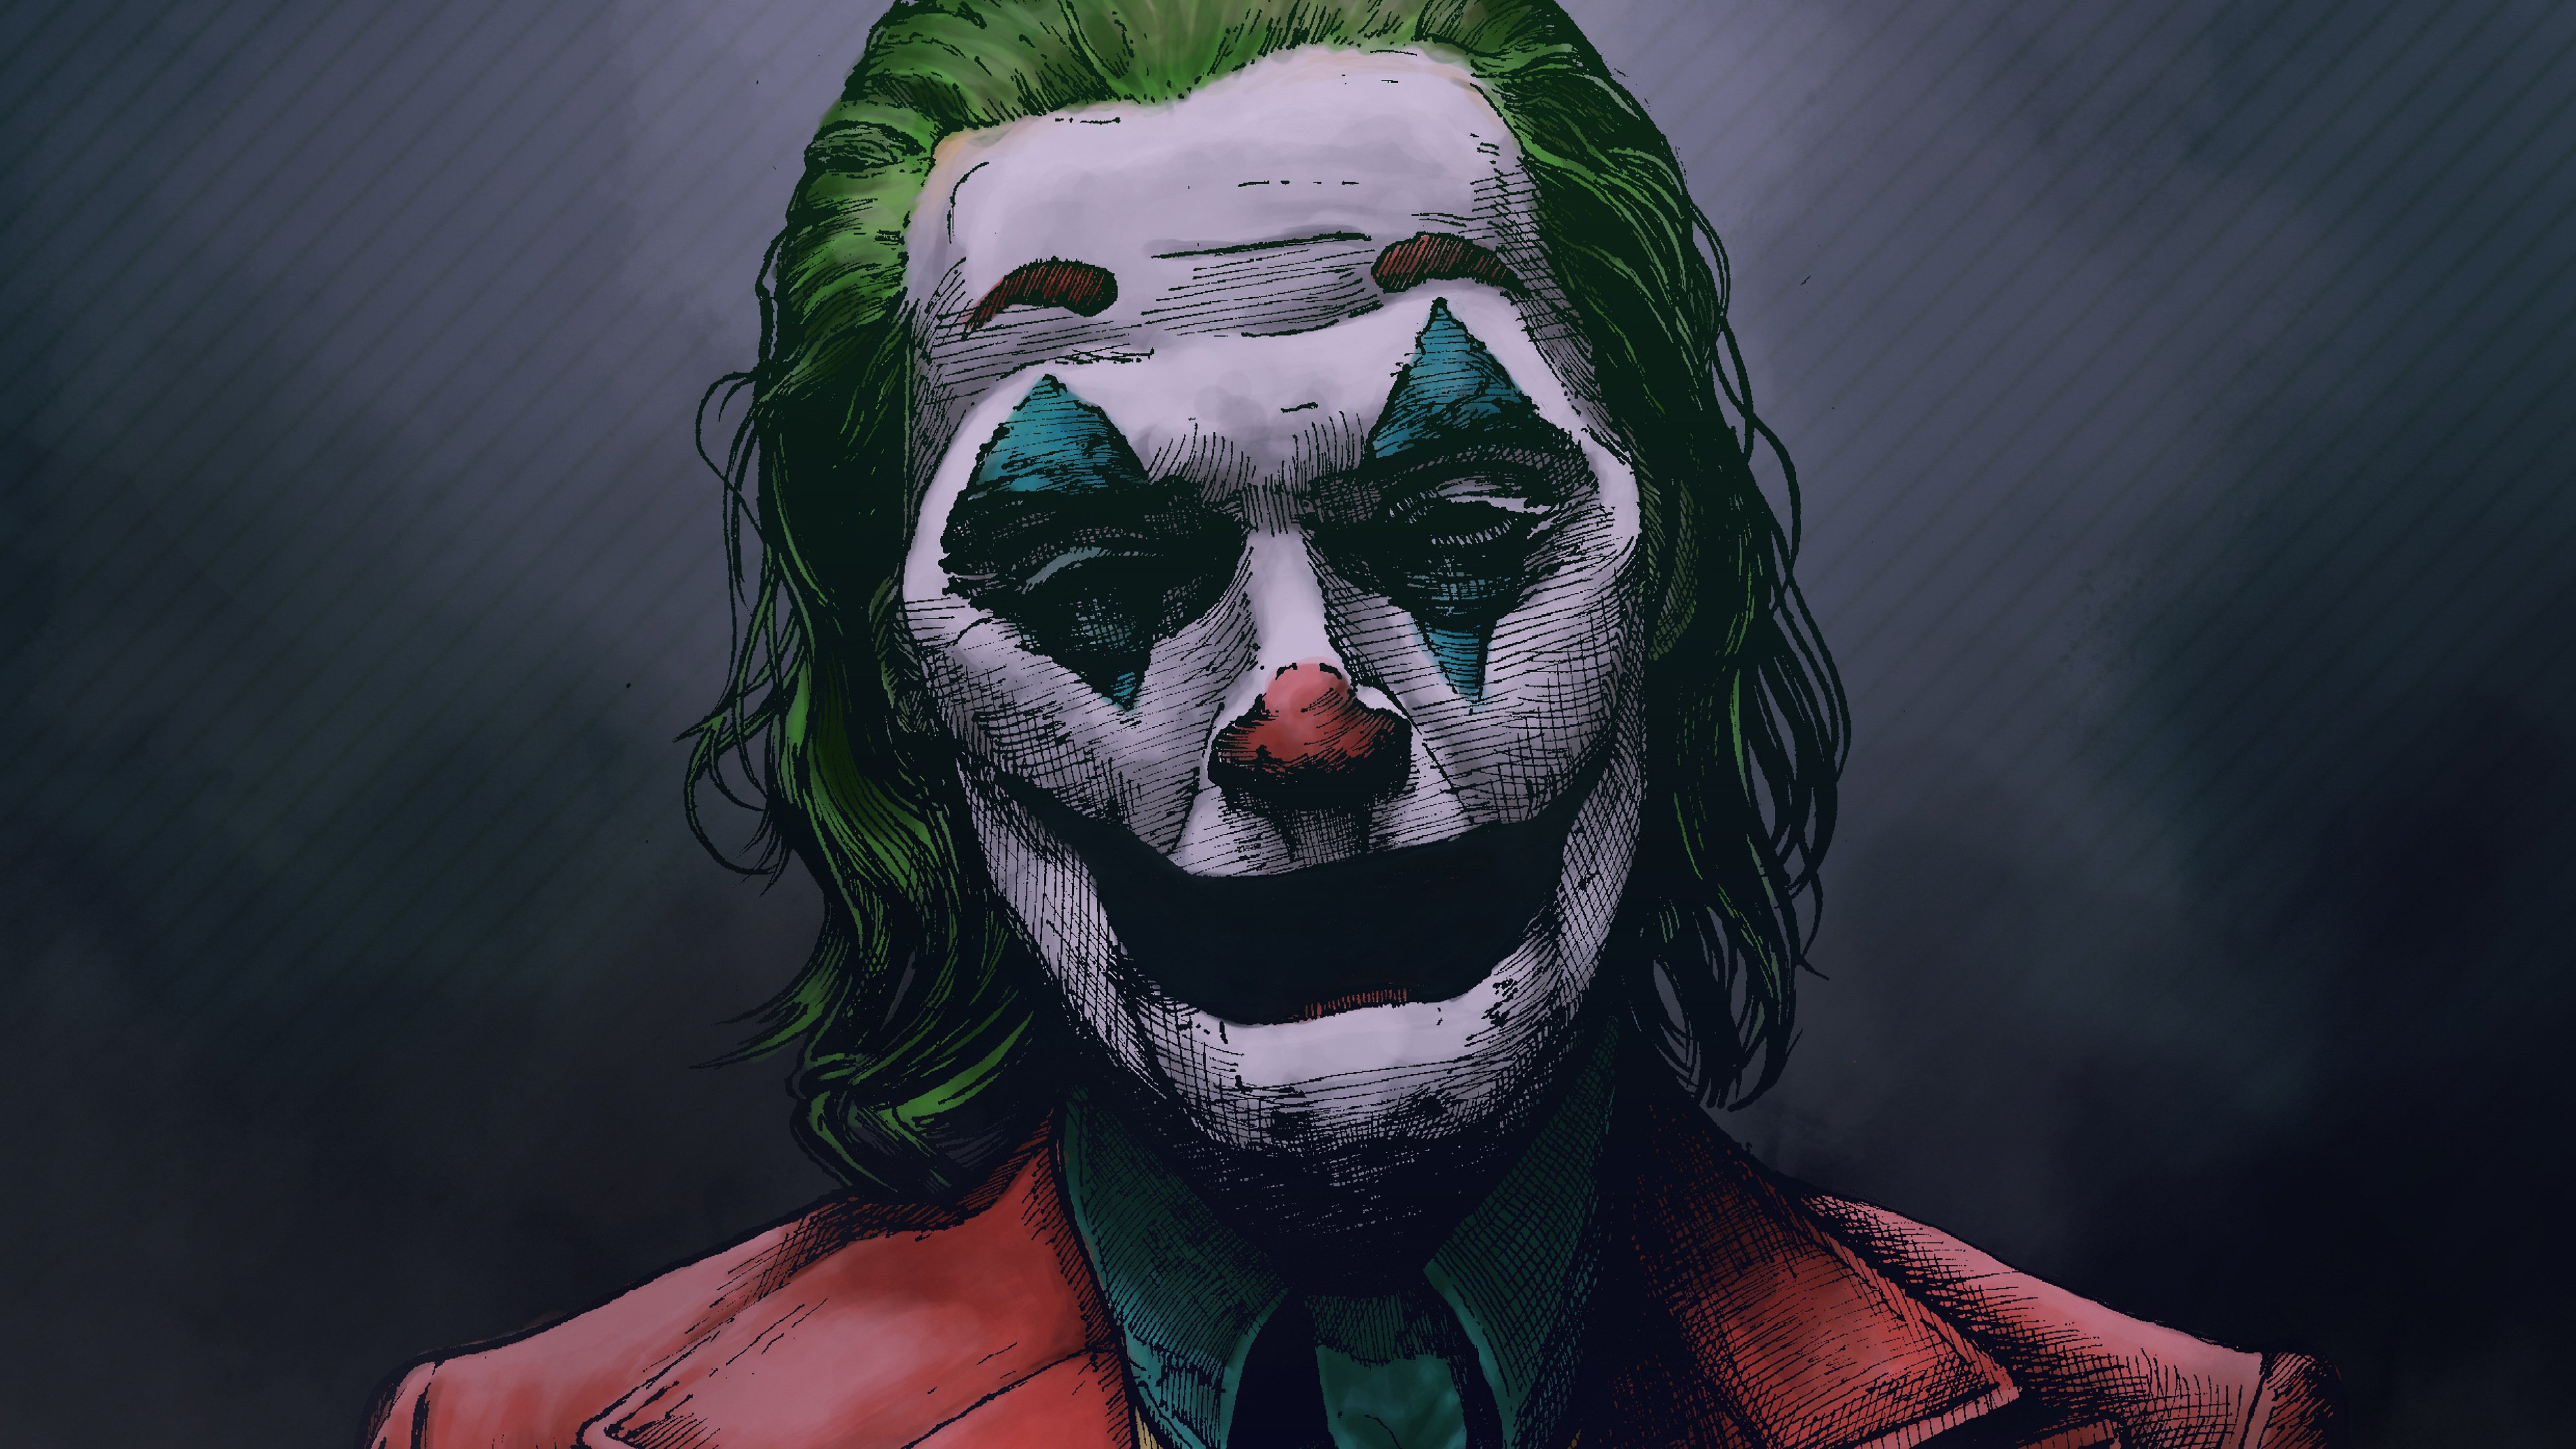 30+] Joker 2019 4K Wallpapers